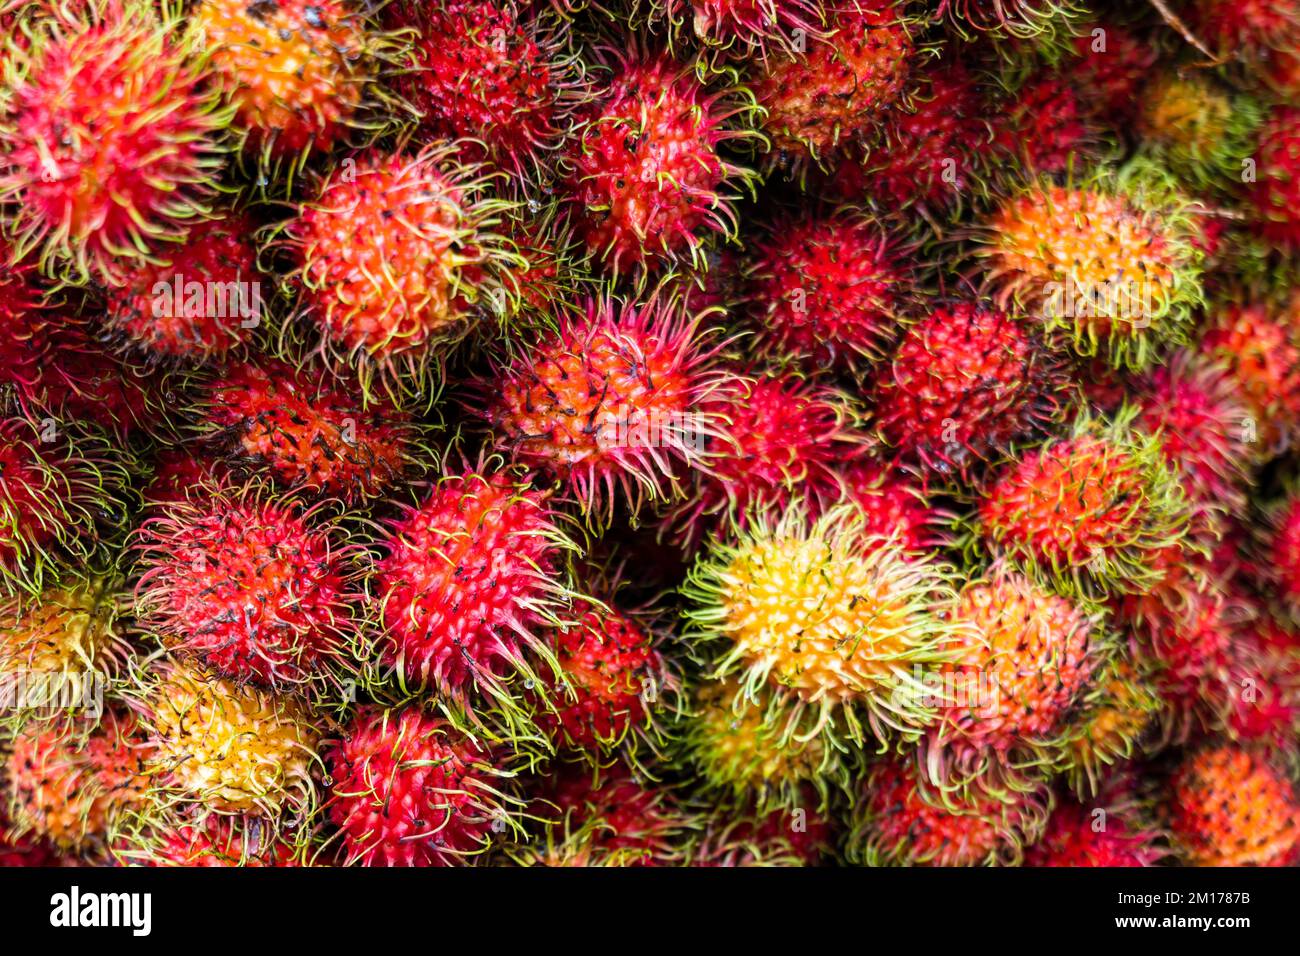 rambutan at organic fruit market in Indonesia. Close up of rambutan fruits (Scientific name: Nephelium lappaceum) Stock Photo